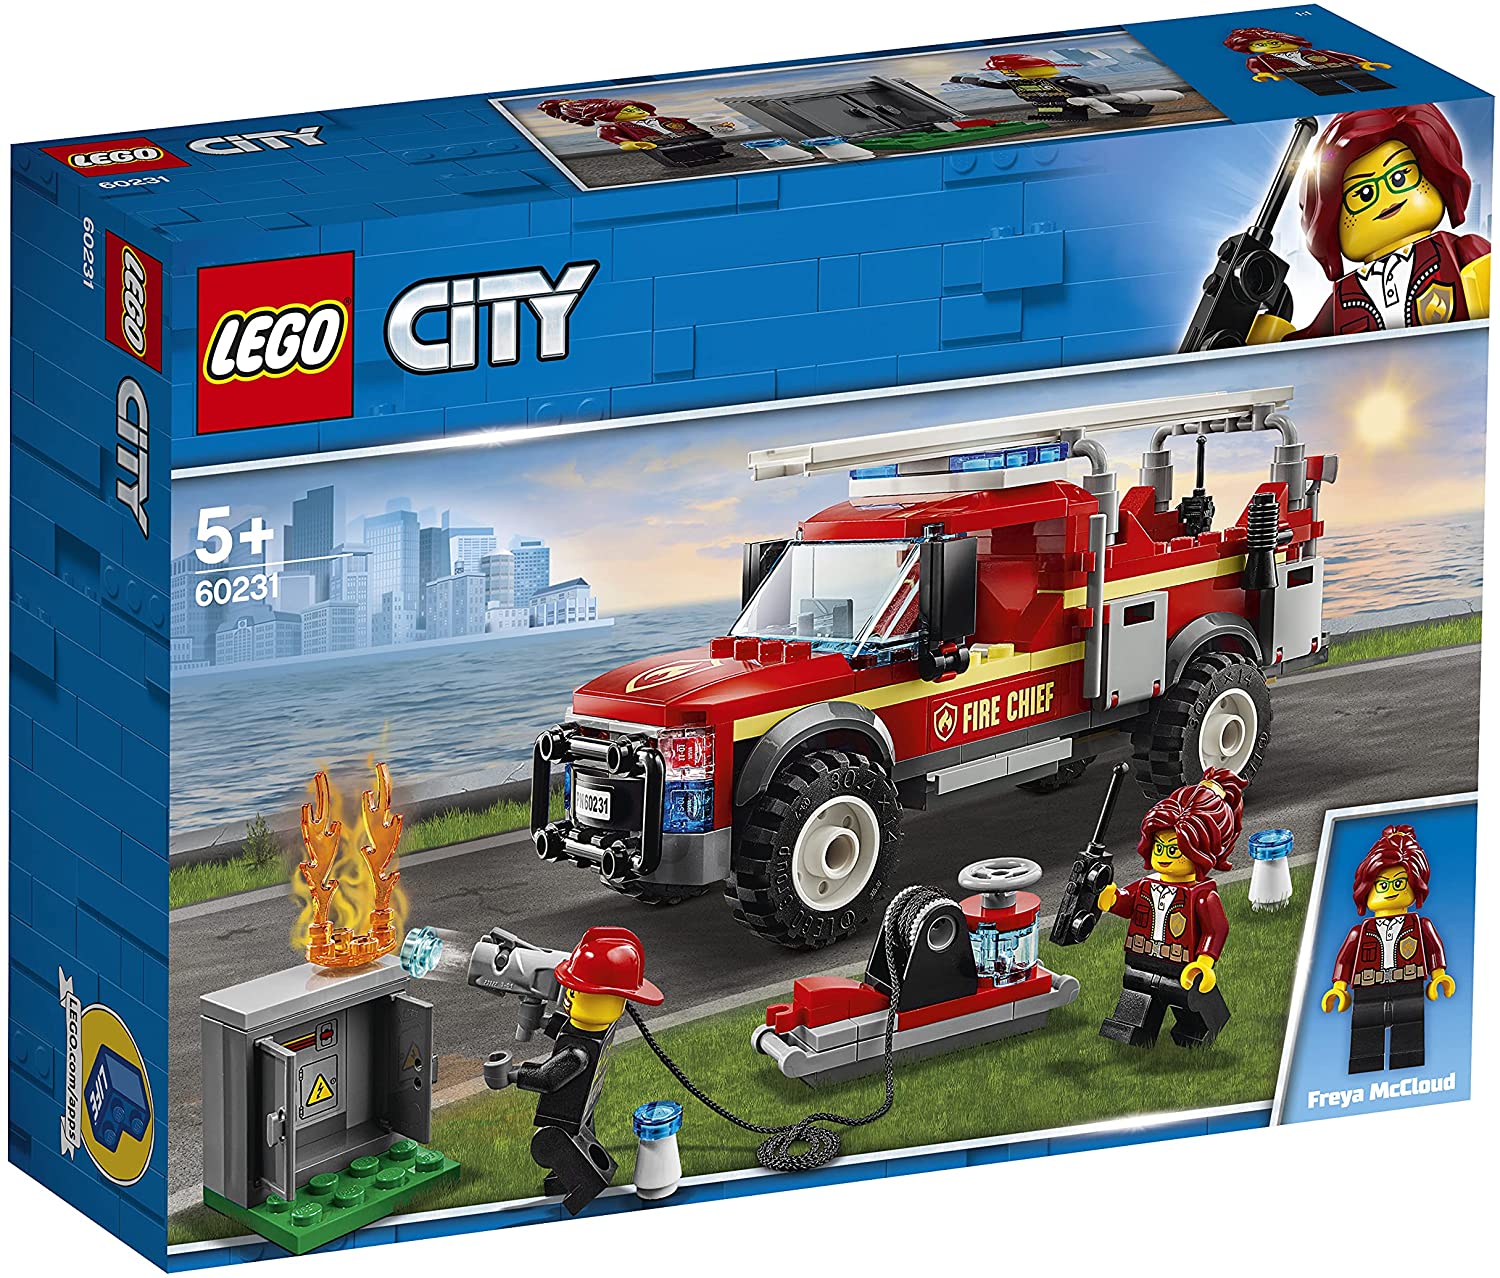 Lego 樂高城市系列特快消防車 積木玩具男孩 好物聯網直營店 樂天市場rakuten